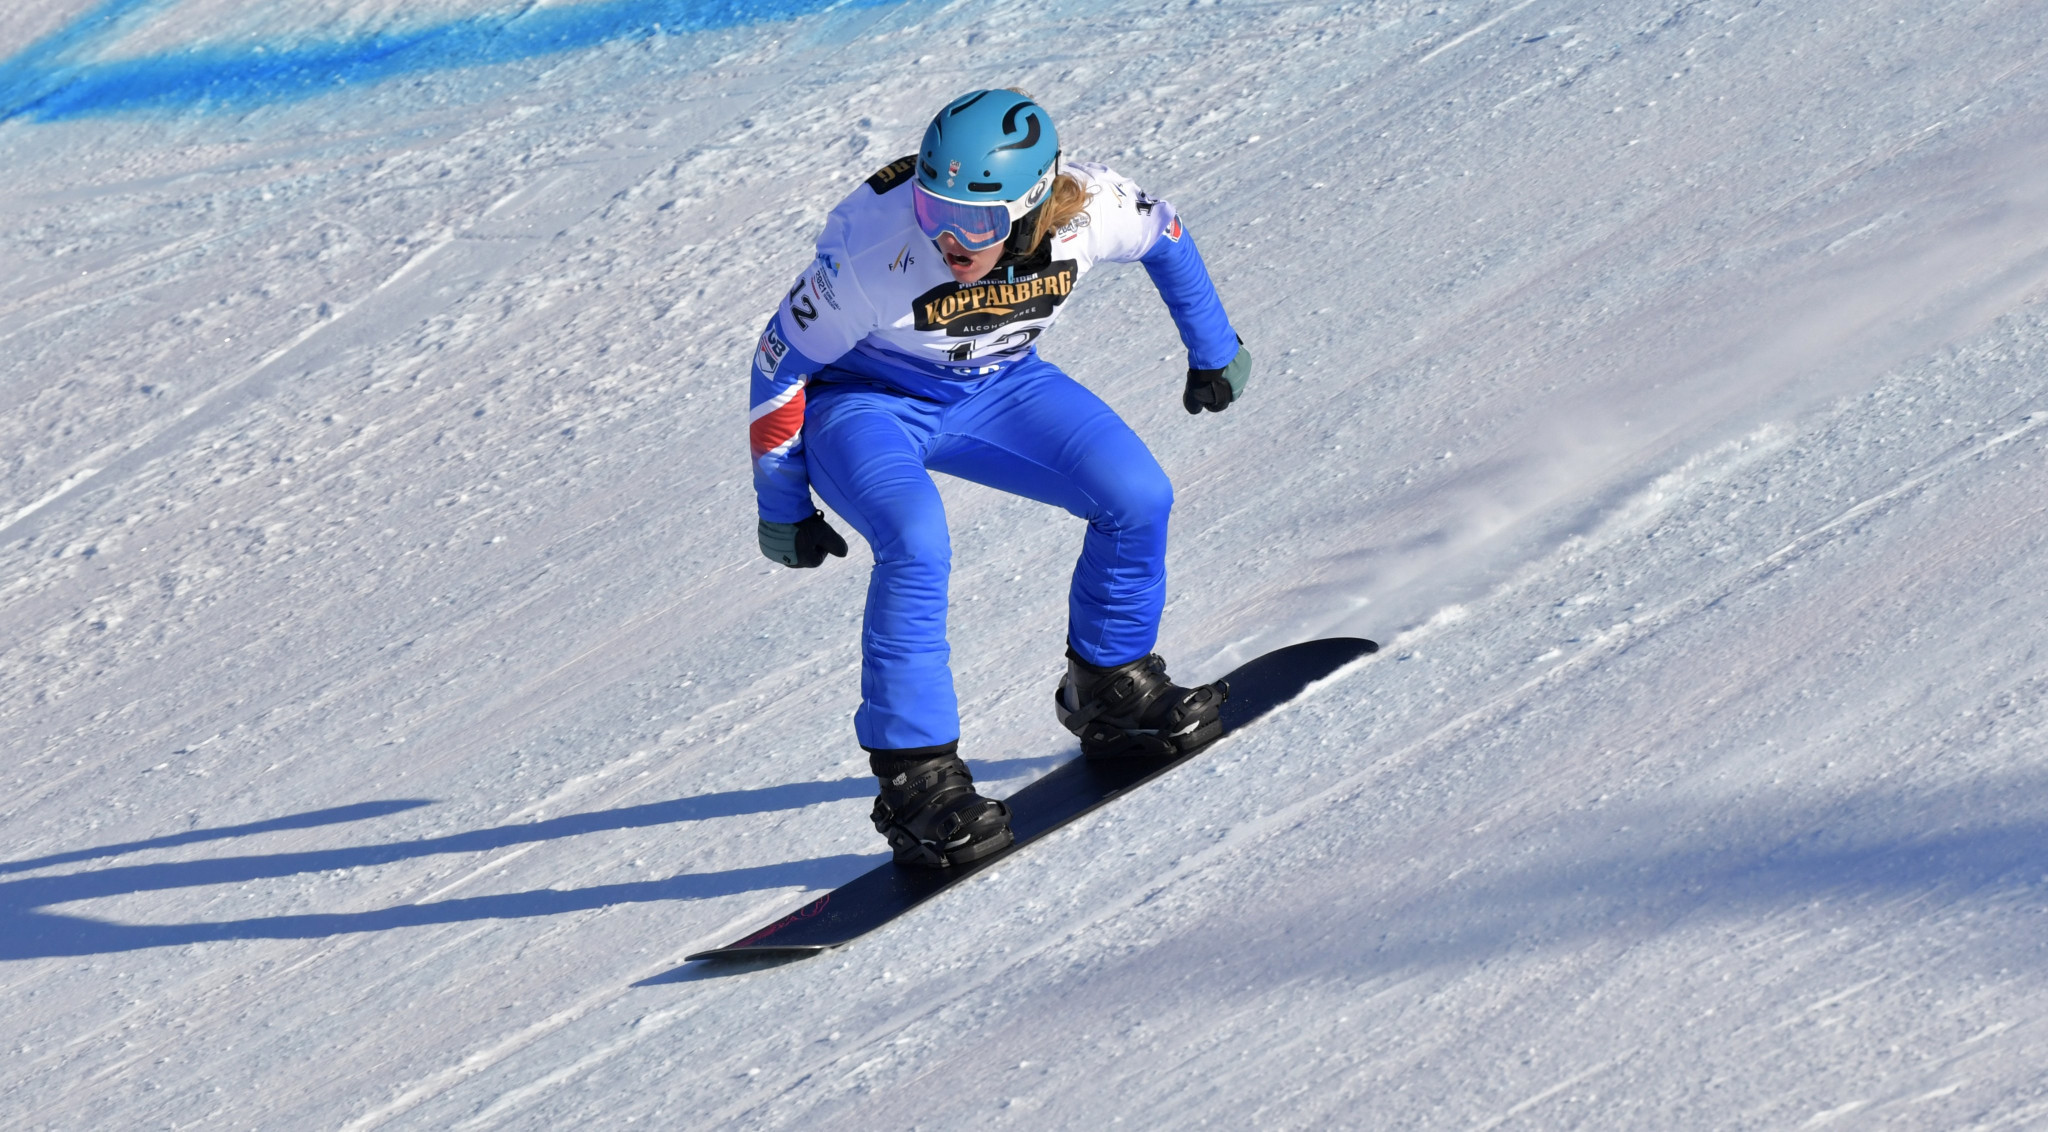 Krasnoyarsk to make debut as Snowboard Cross World Cup host